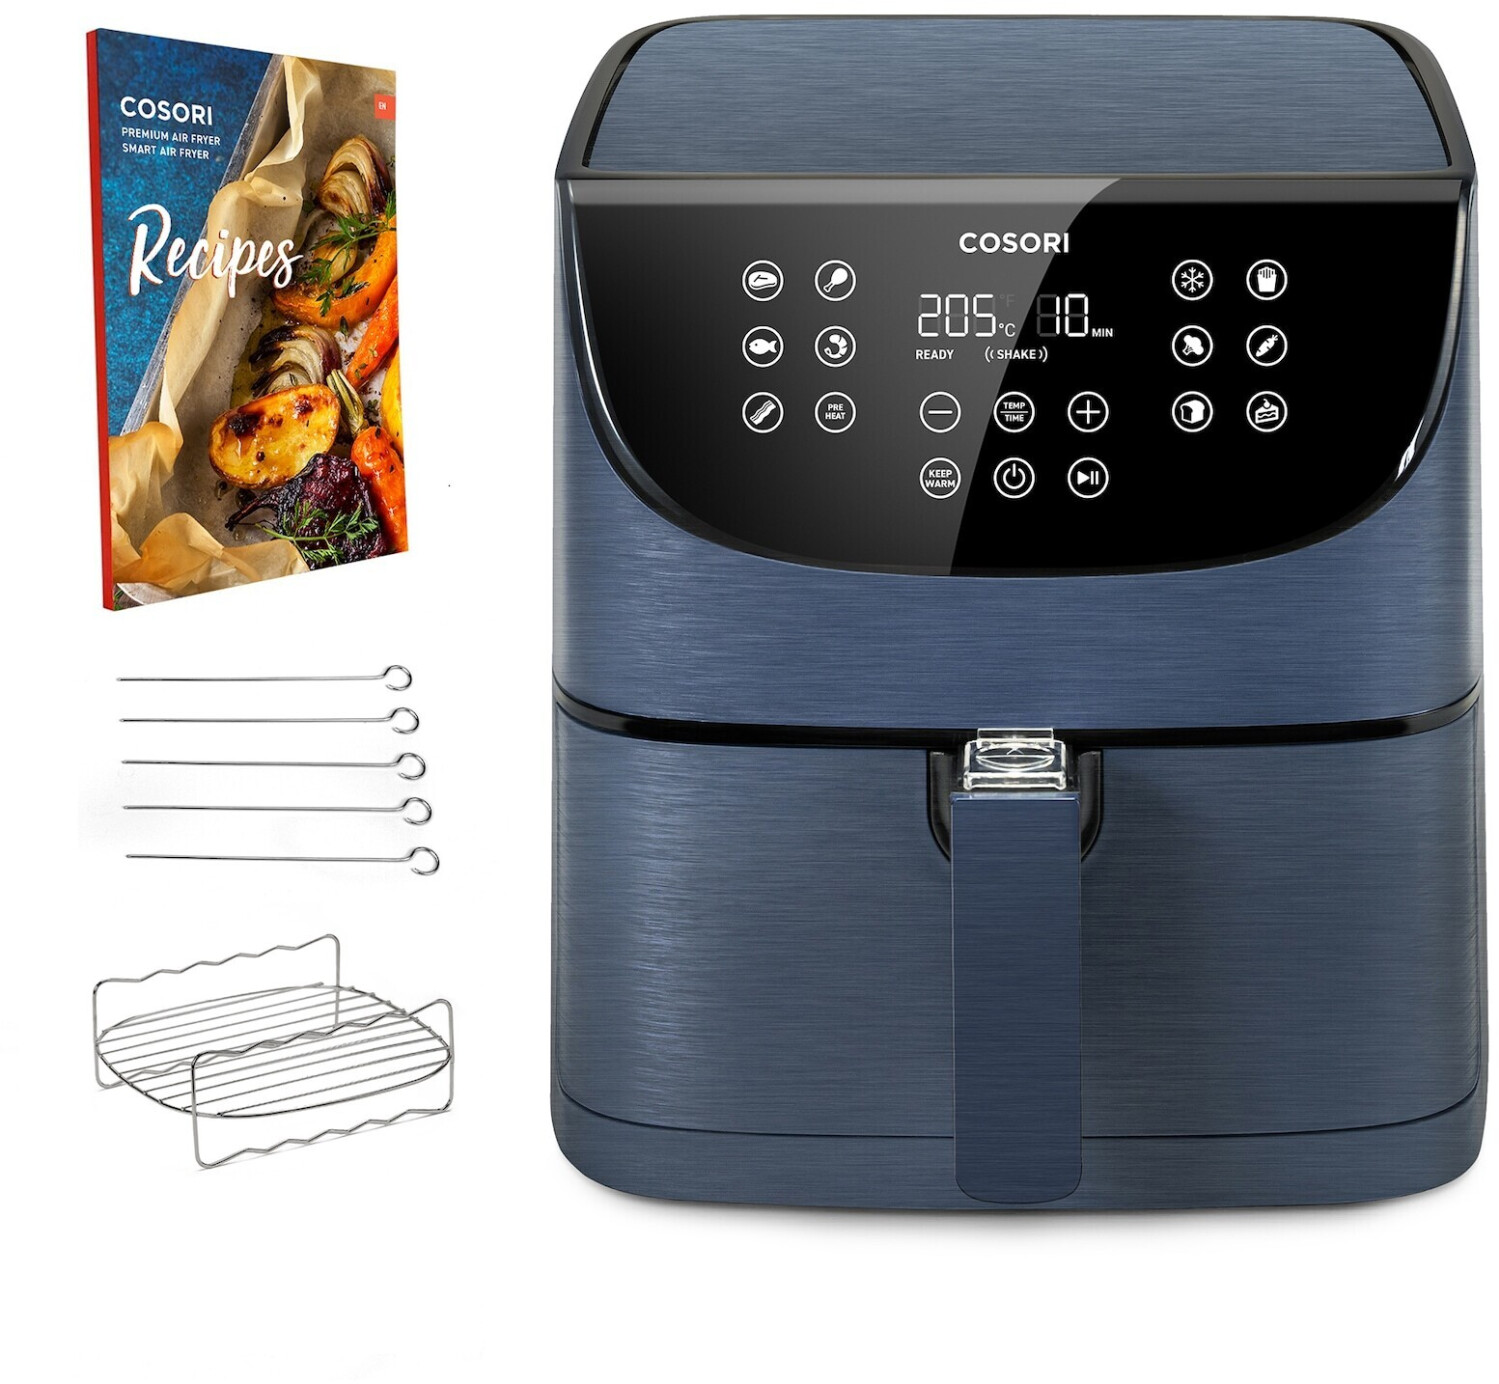 Freidora de aire  Cosori Premium Chef Edition, Capacidad 5.5L